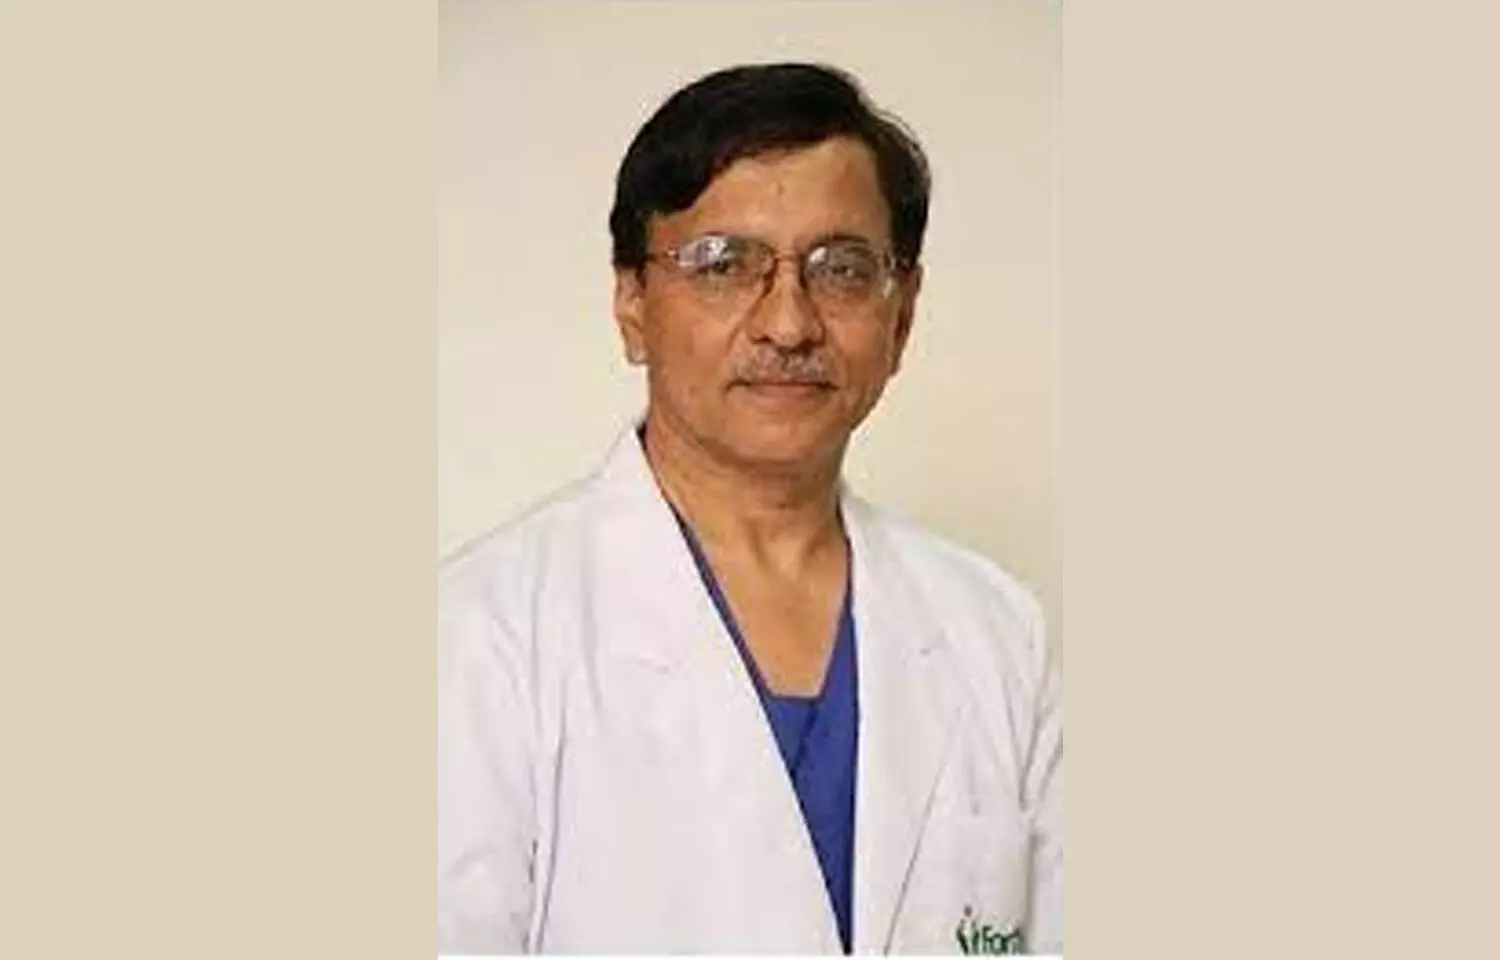 Former PGIMER professor Dr Ramesh Kumar Sen elected president of Indian Orthopaedic Association